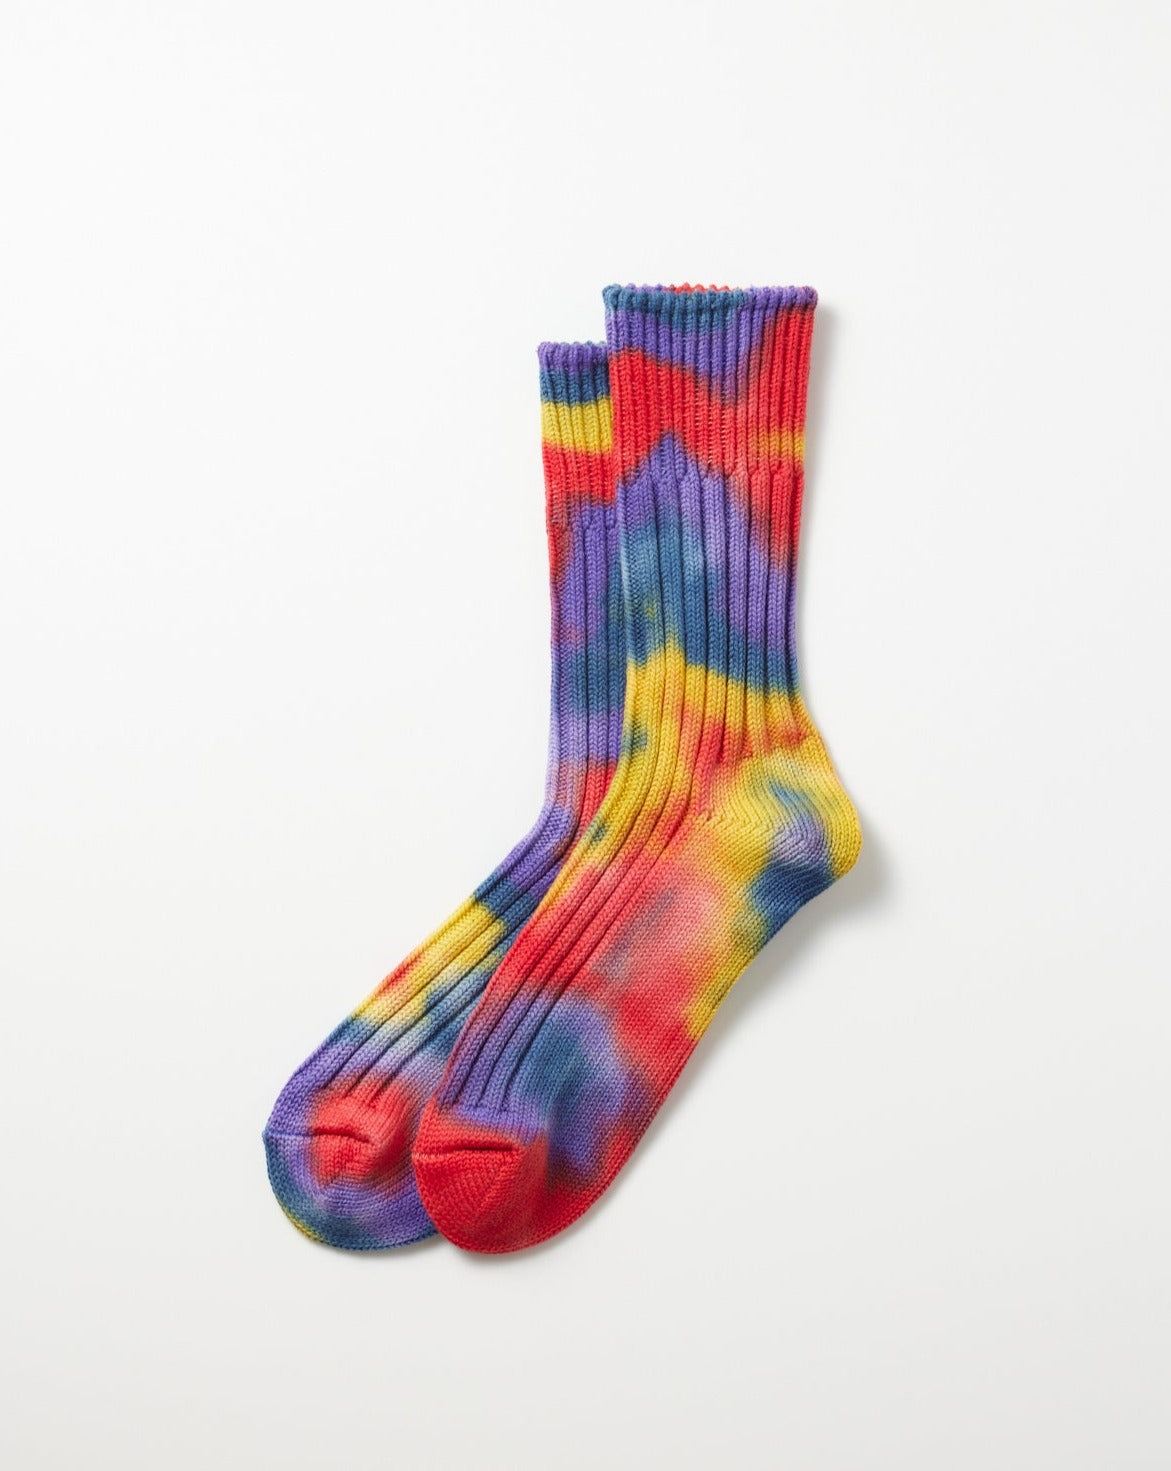 Chunky Ribbed Crew Socks "Tie Dye" - RED/YEL/BLU